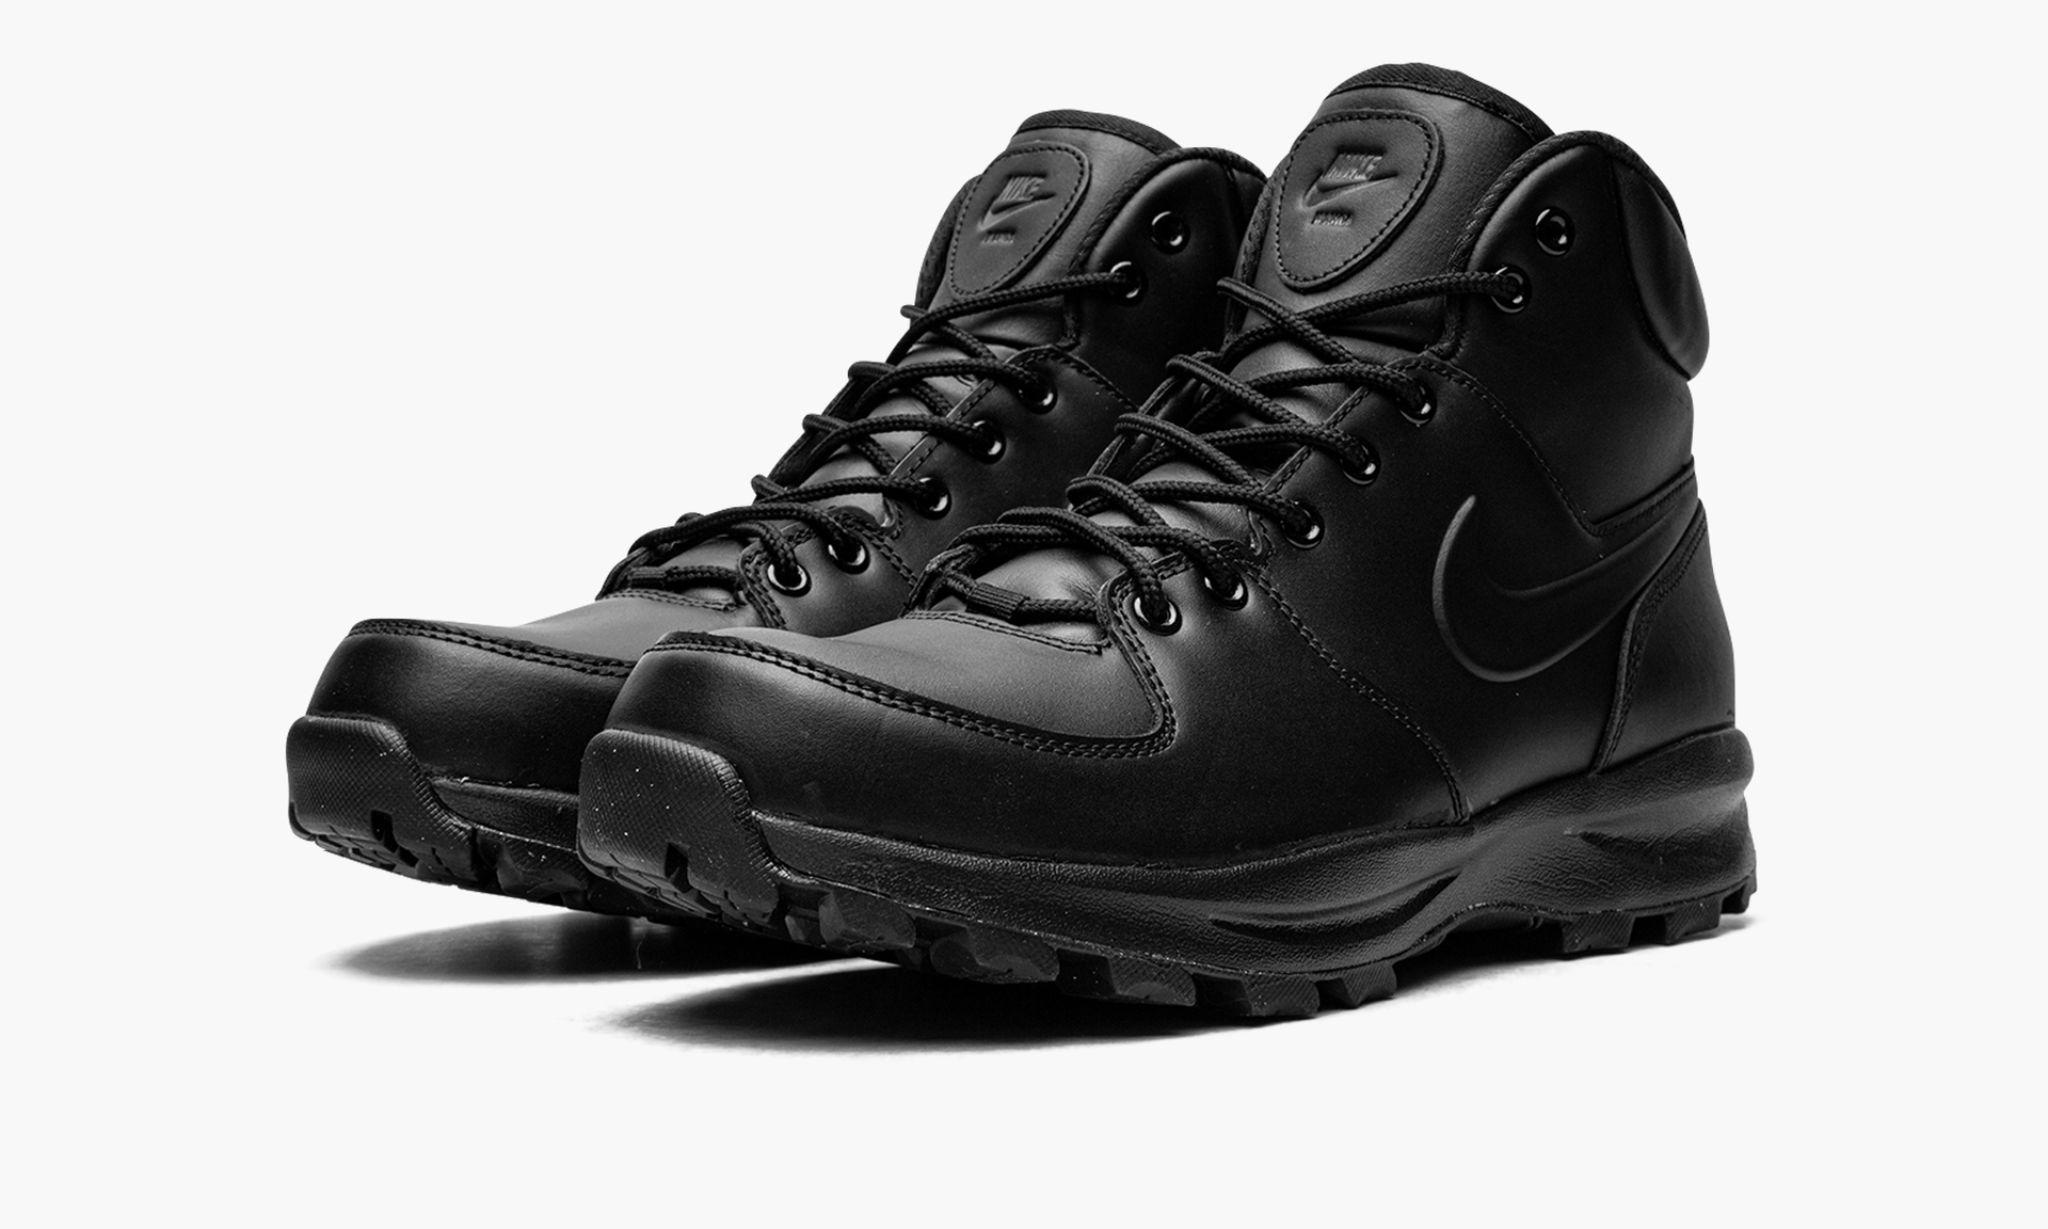 Nike Leather Manoa in Black,Black,Black (Black) for Men - Save 45% | Lyst